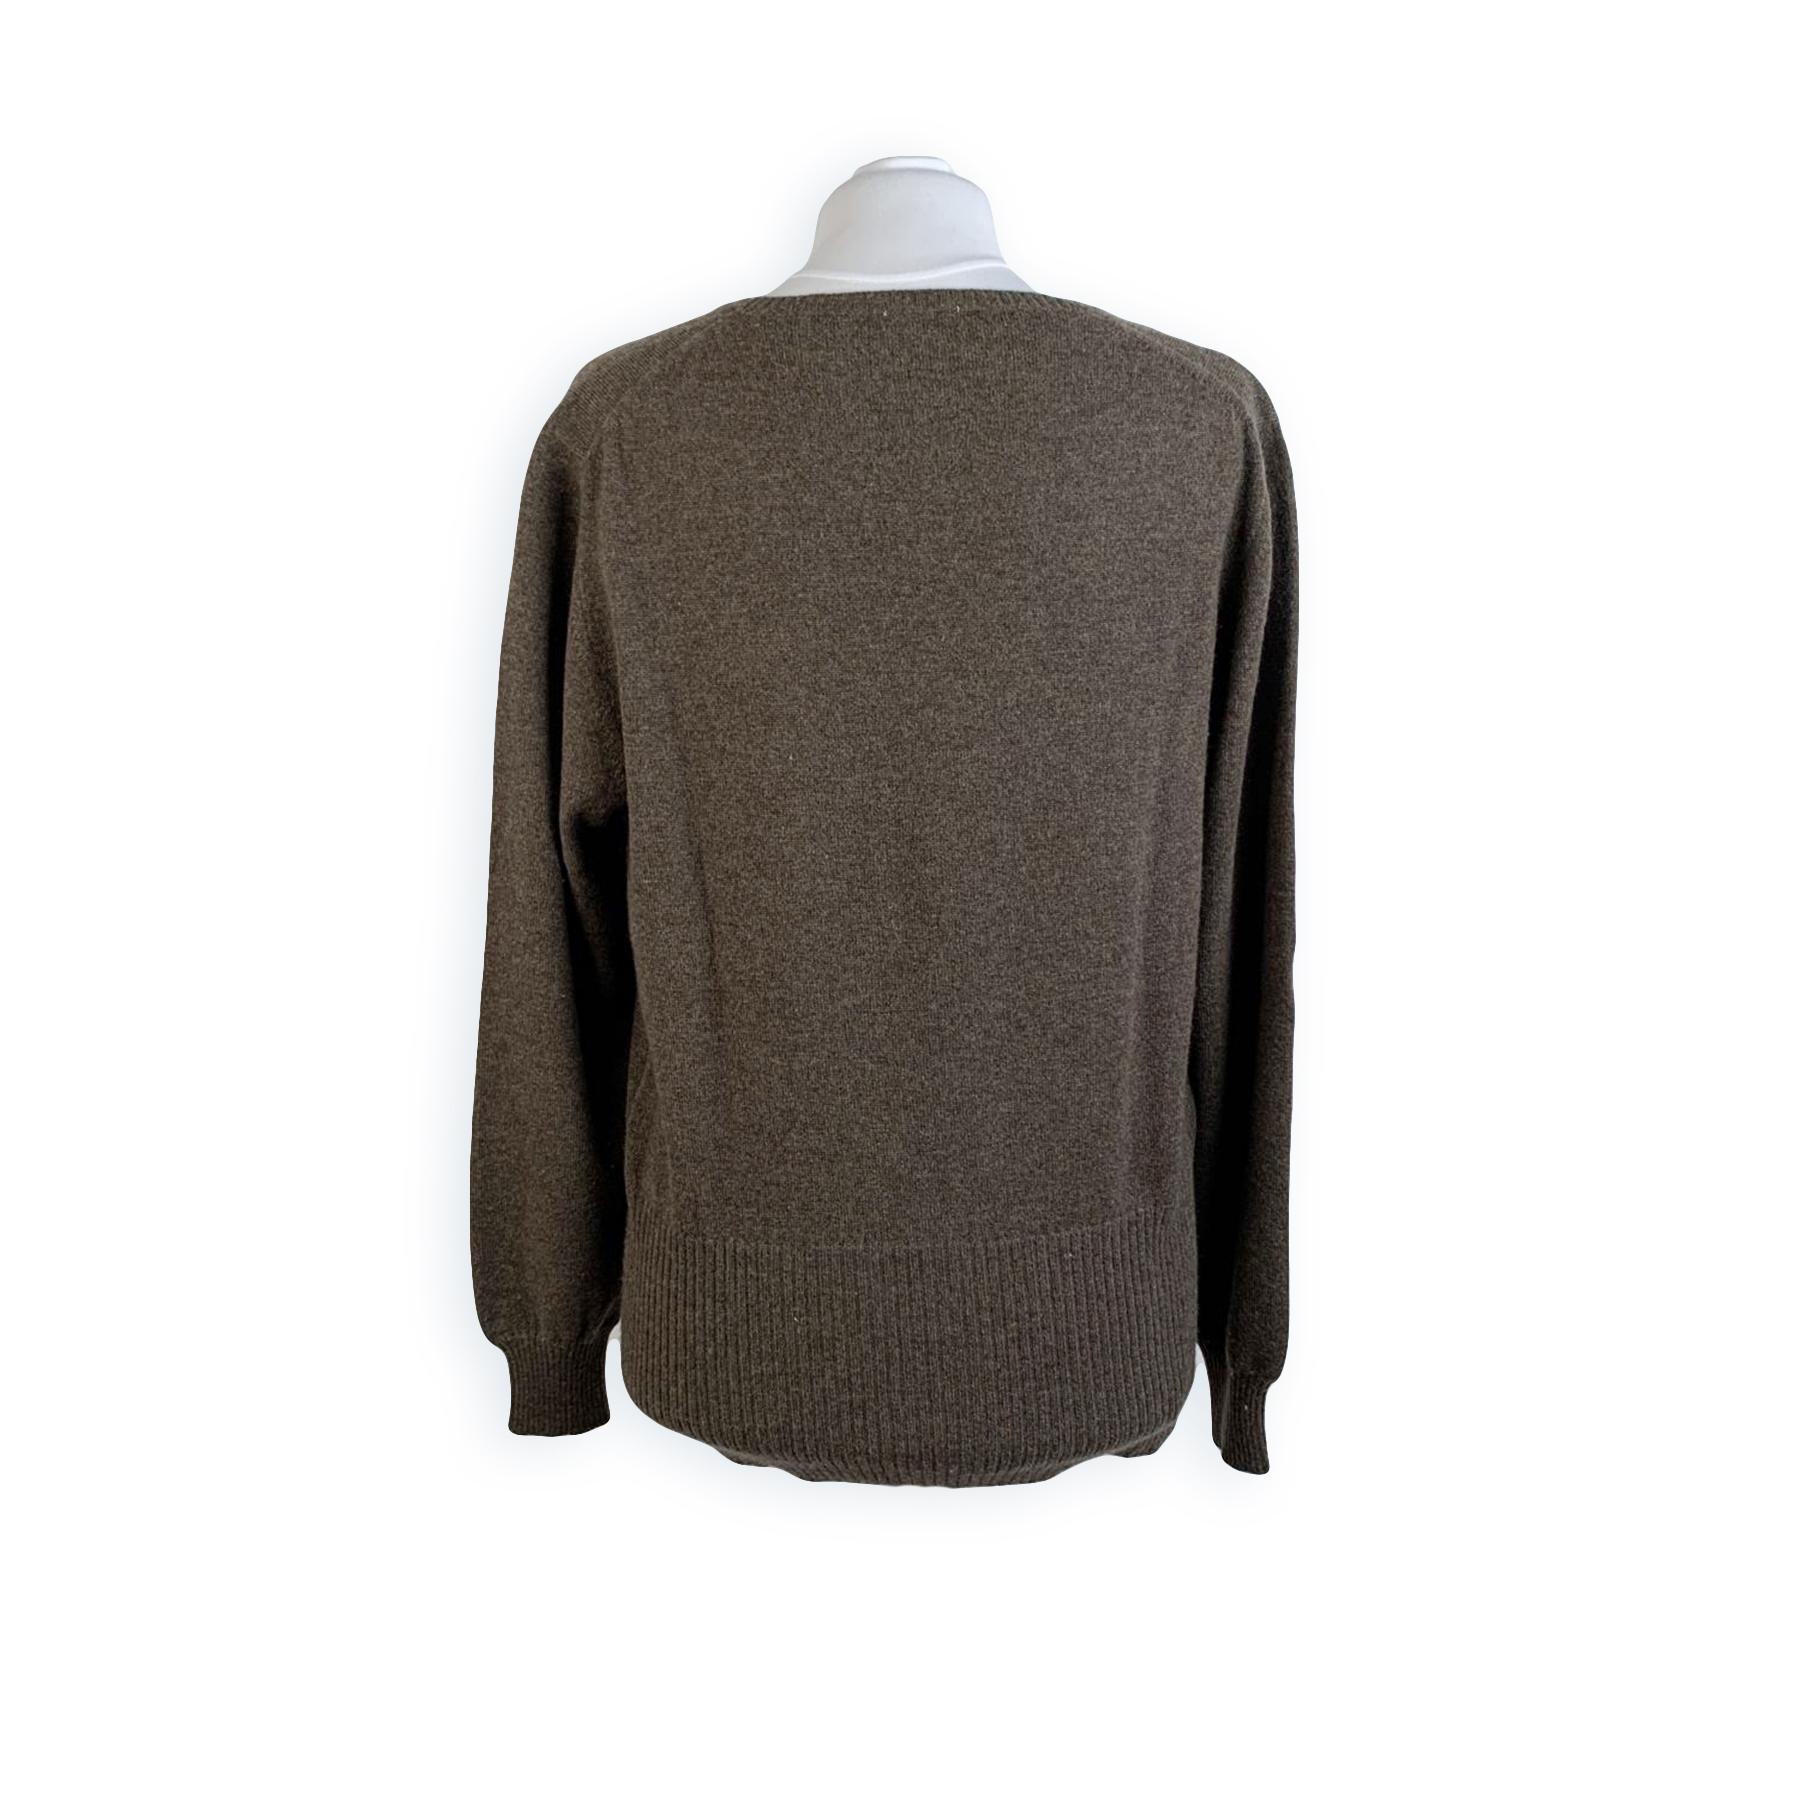 Black Malo Brown Cashmere Knit Jumper Sweater Size 46